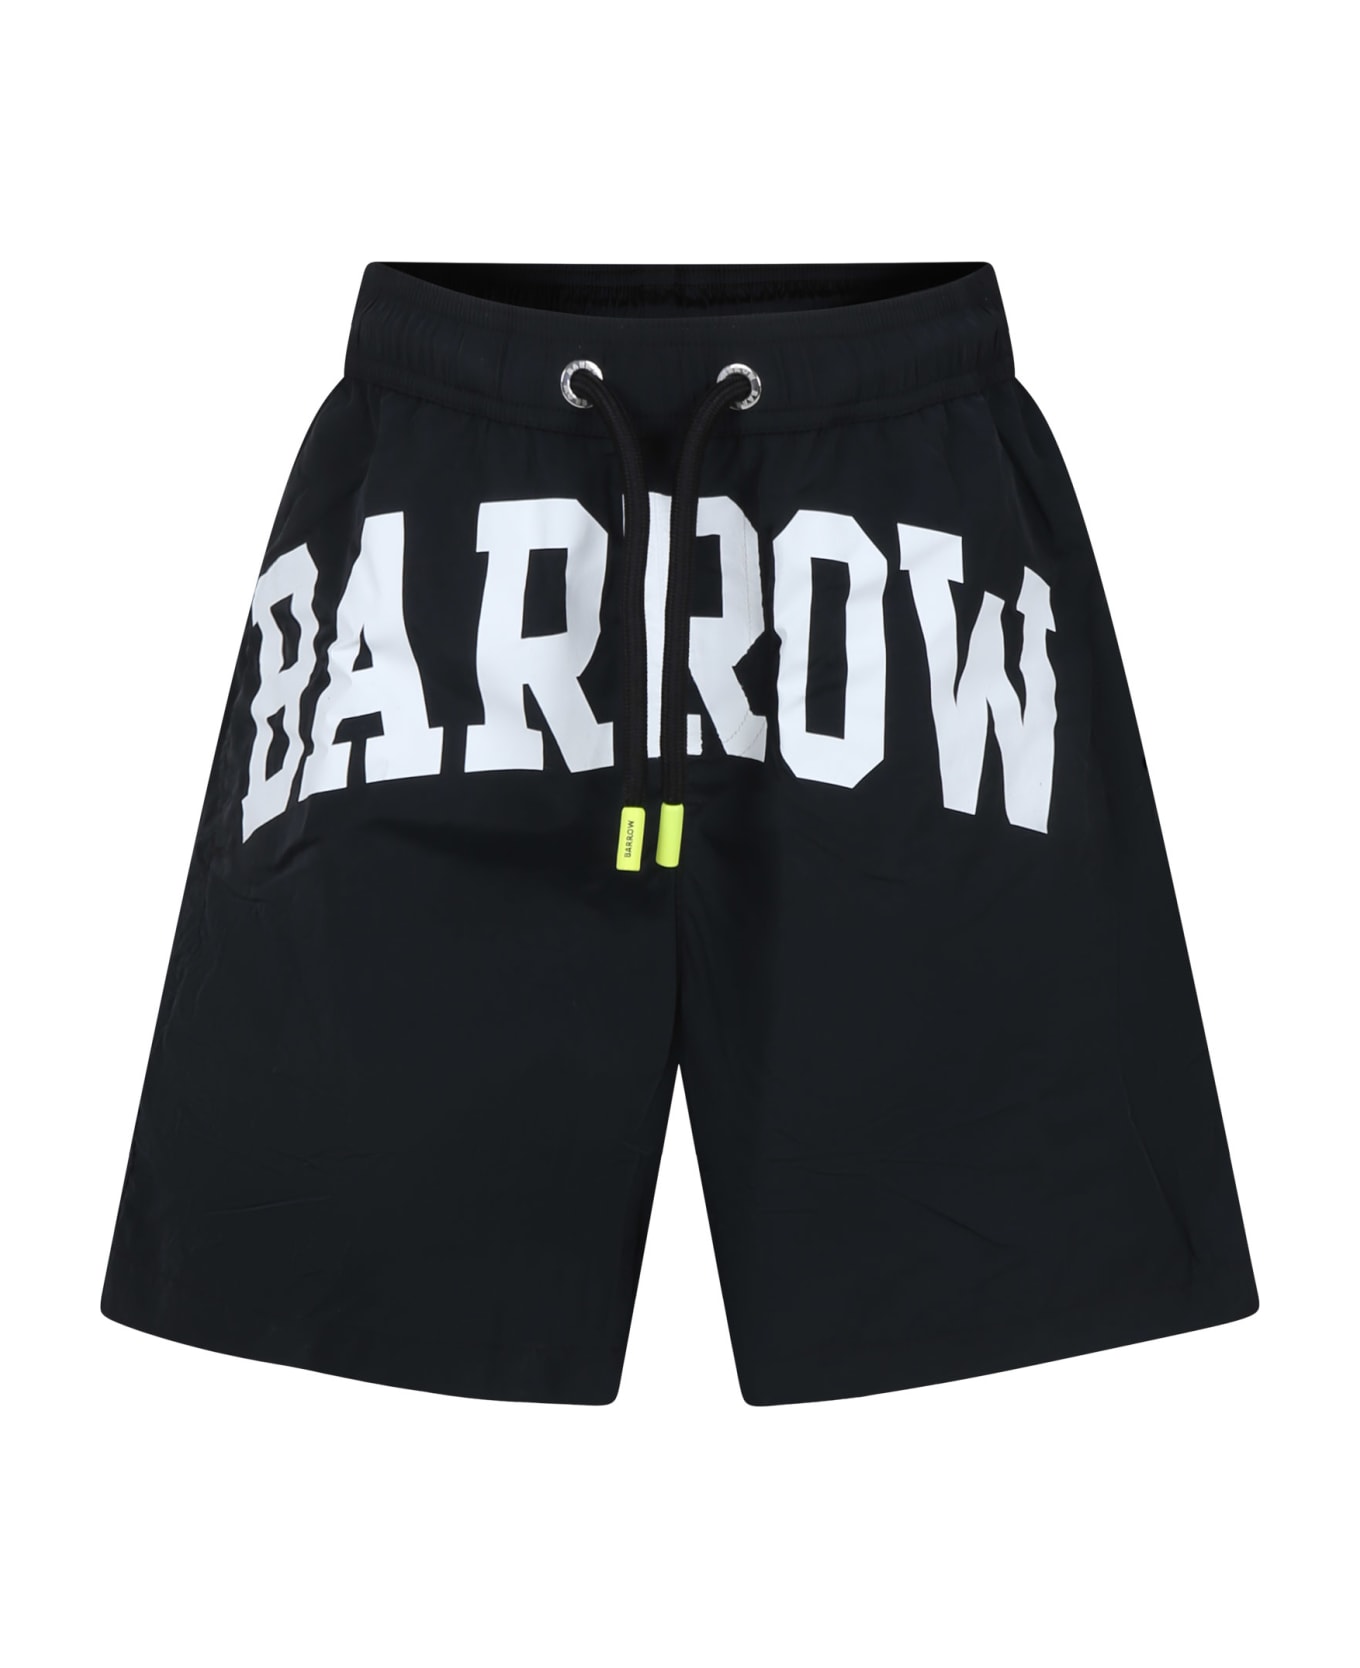 Barrow Black Swim Shorts For Boy With Smiley - Black